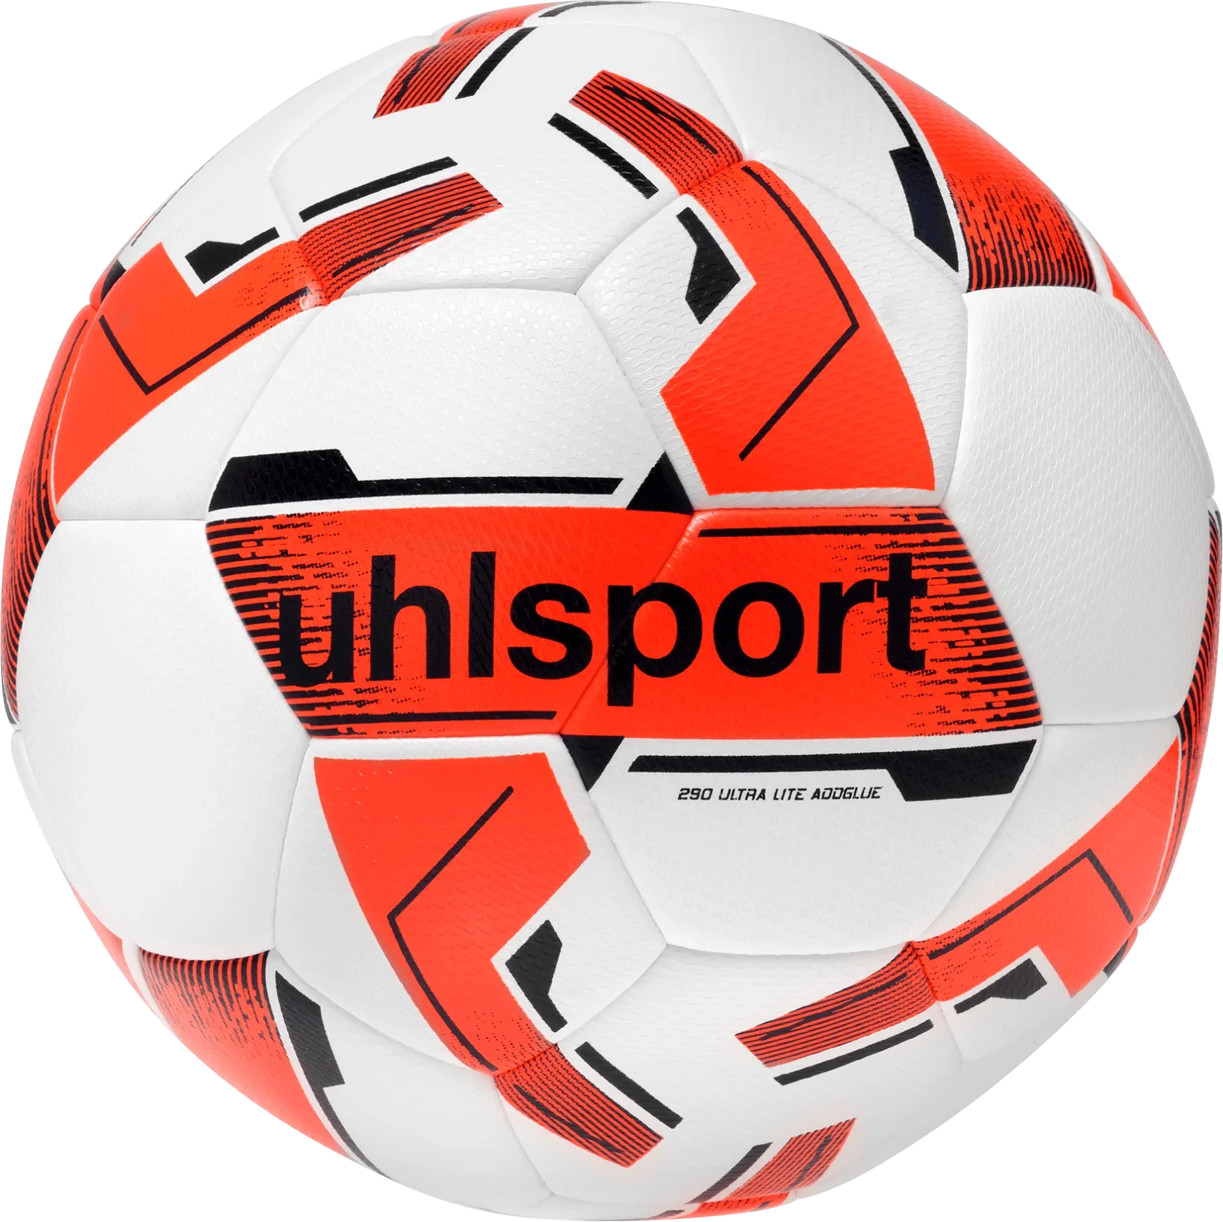 Ball Uhlsport 290 Ultra Lite Addglue Trainingsball